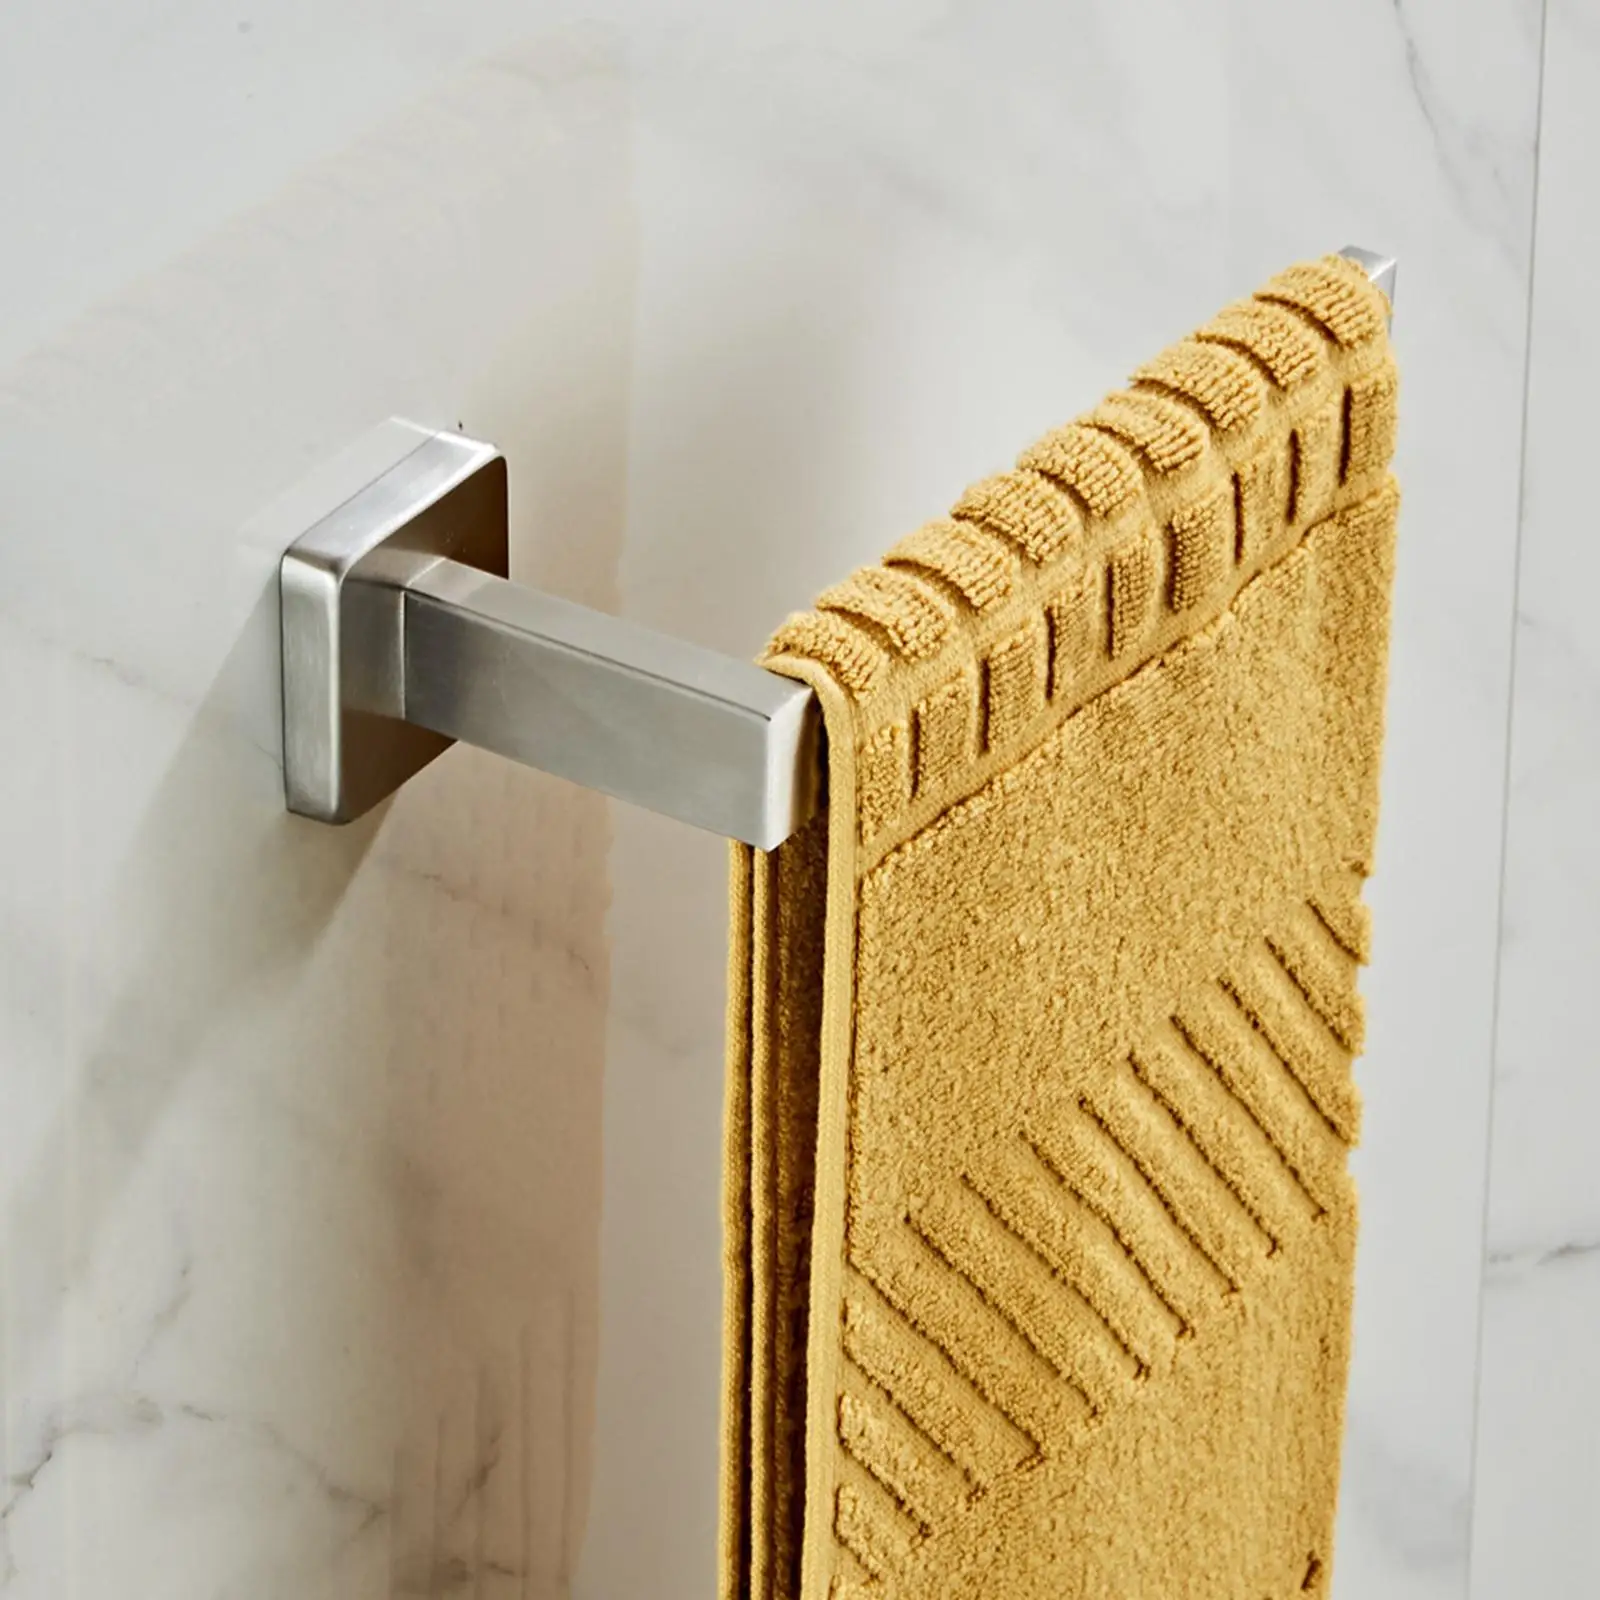 4 Pieces Stainless Towel Bar Set Rustproof Waterproof Toilet Paper Roll Holder Coat Hanger Bath Accessory Set